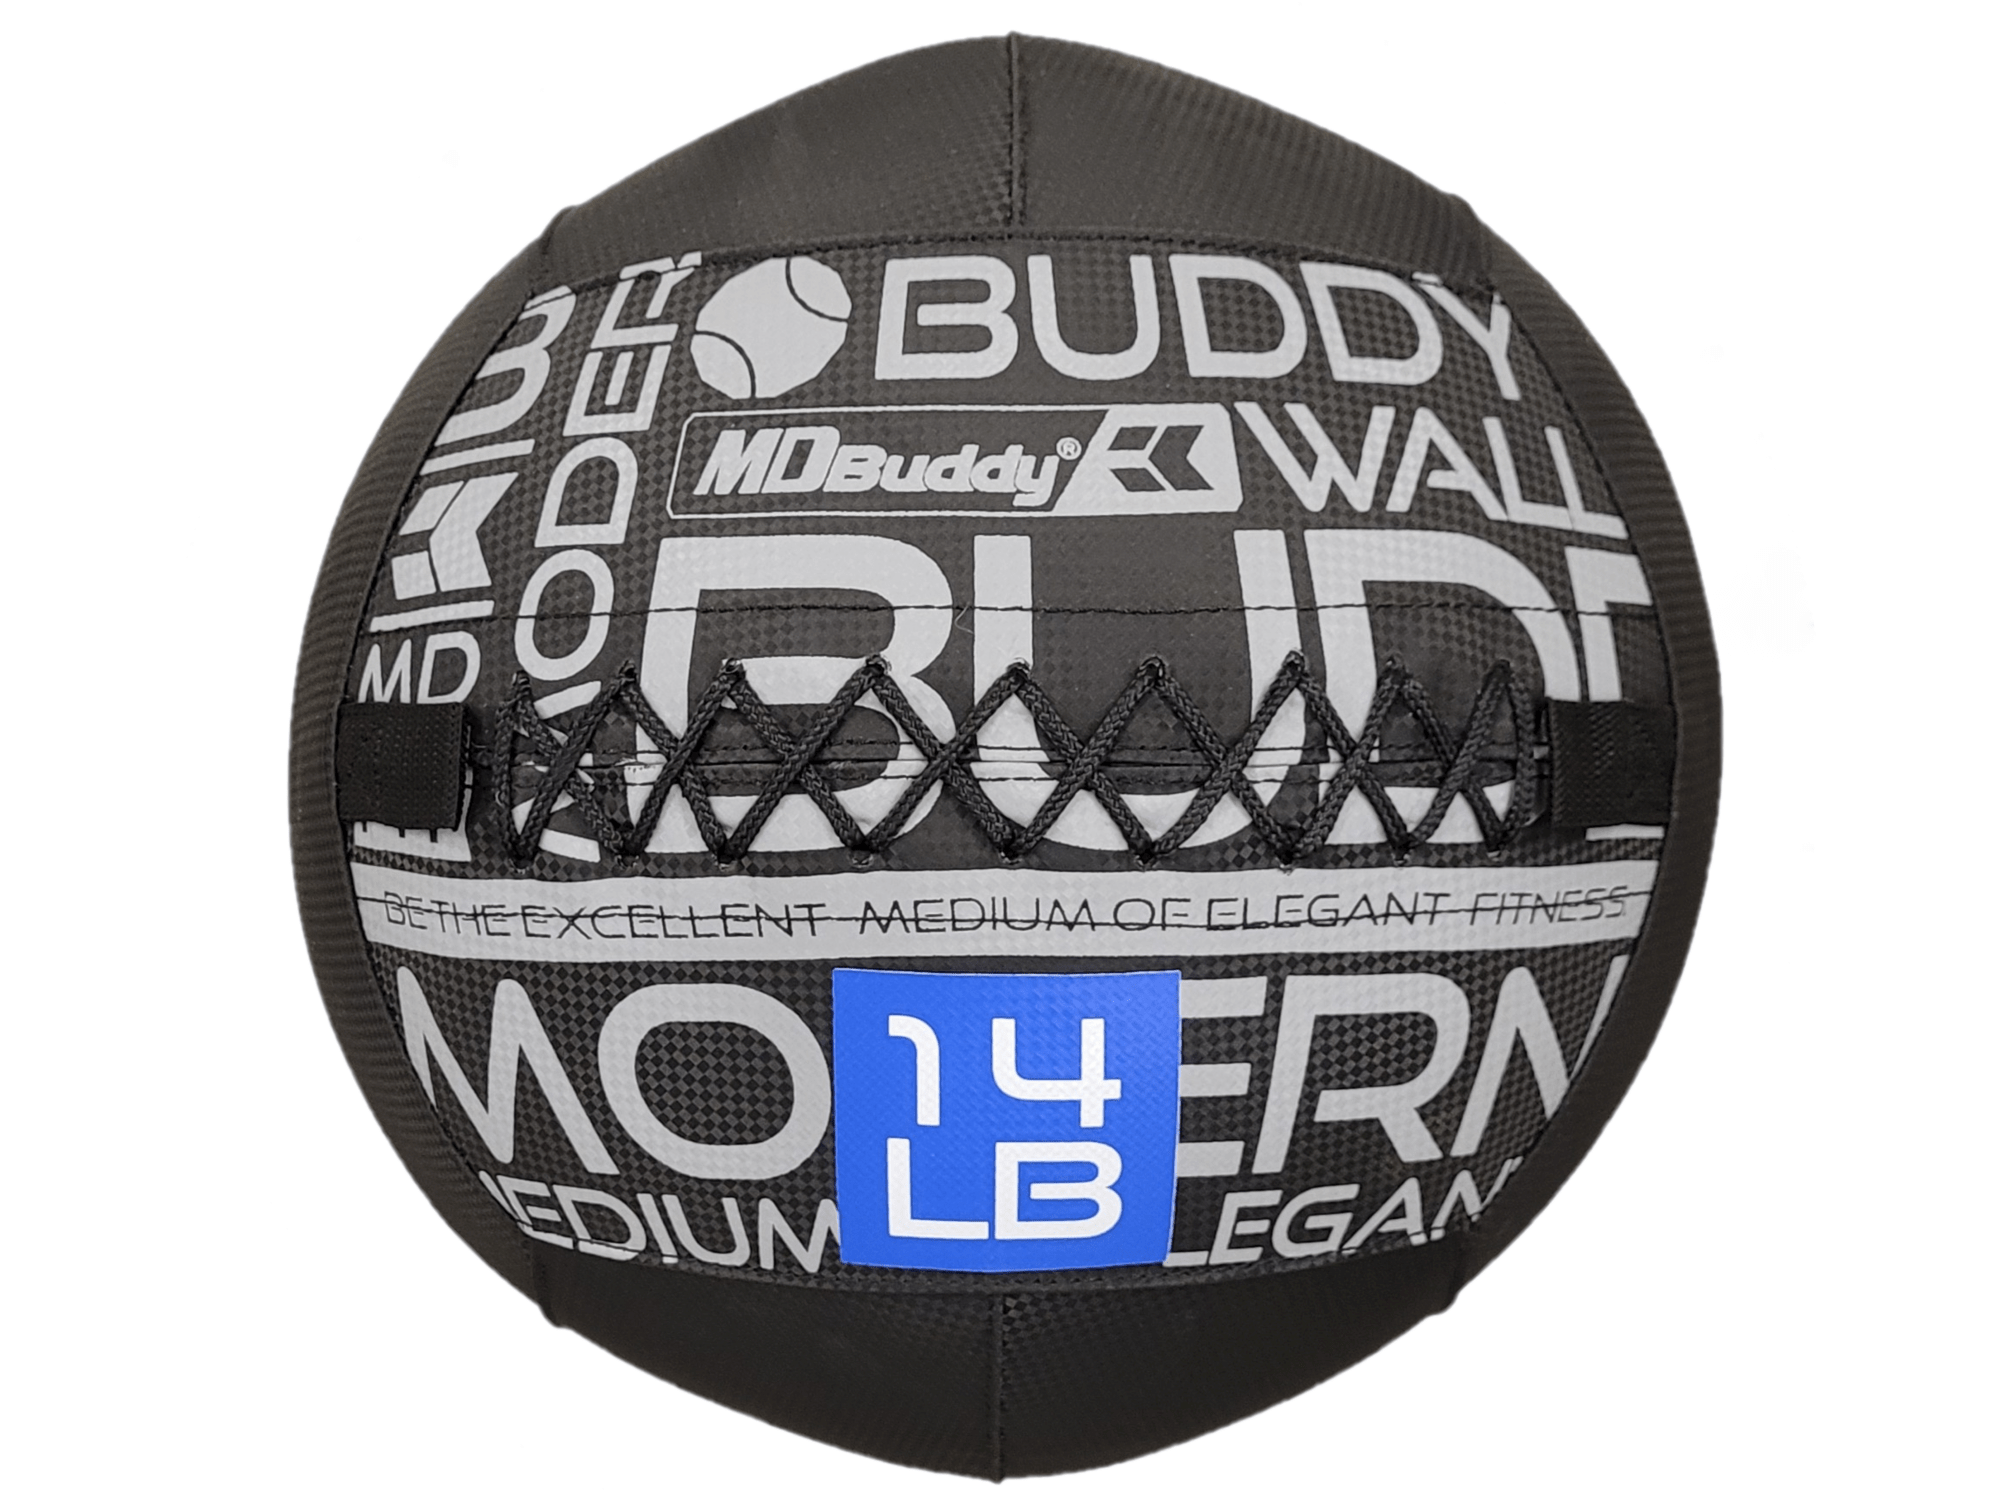 MD Buddy Wall Balls-Balls-MD Buddy-5